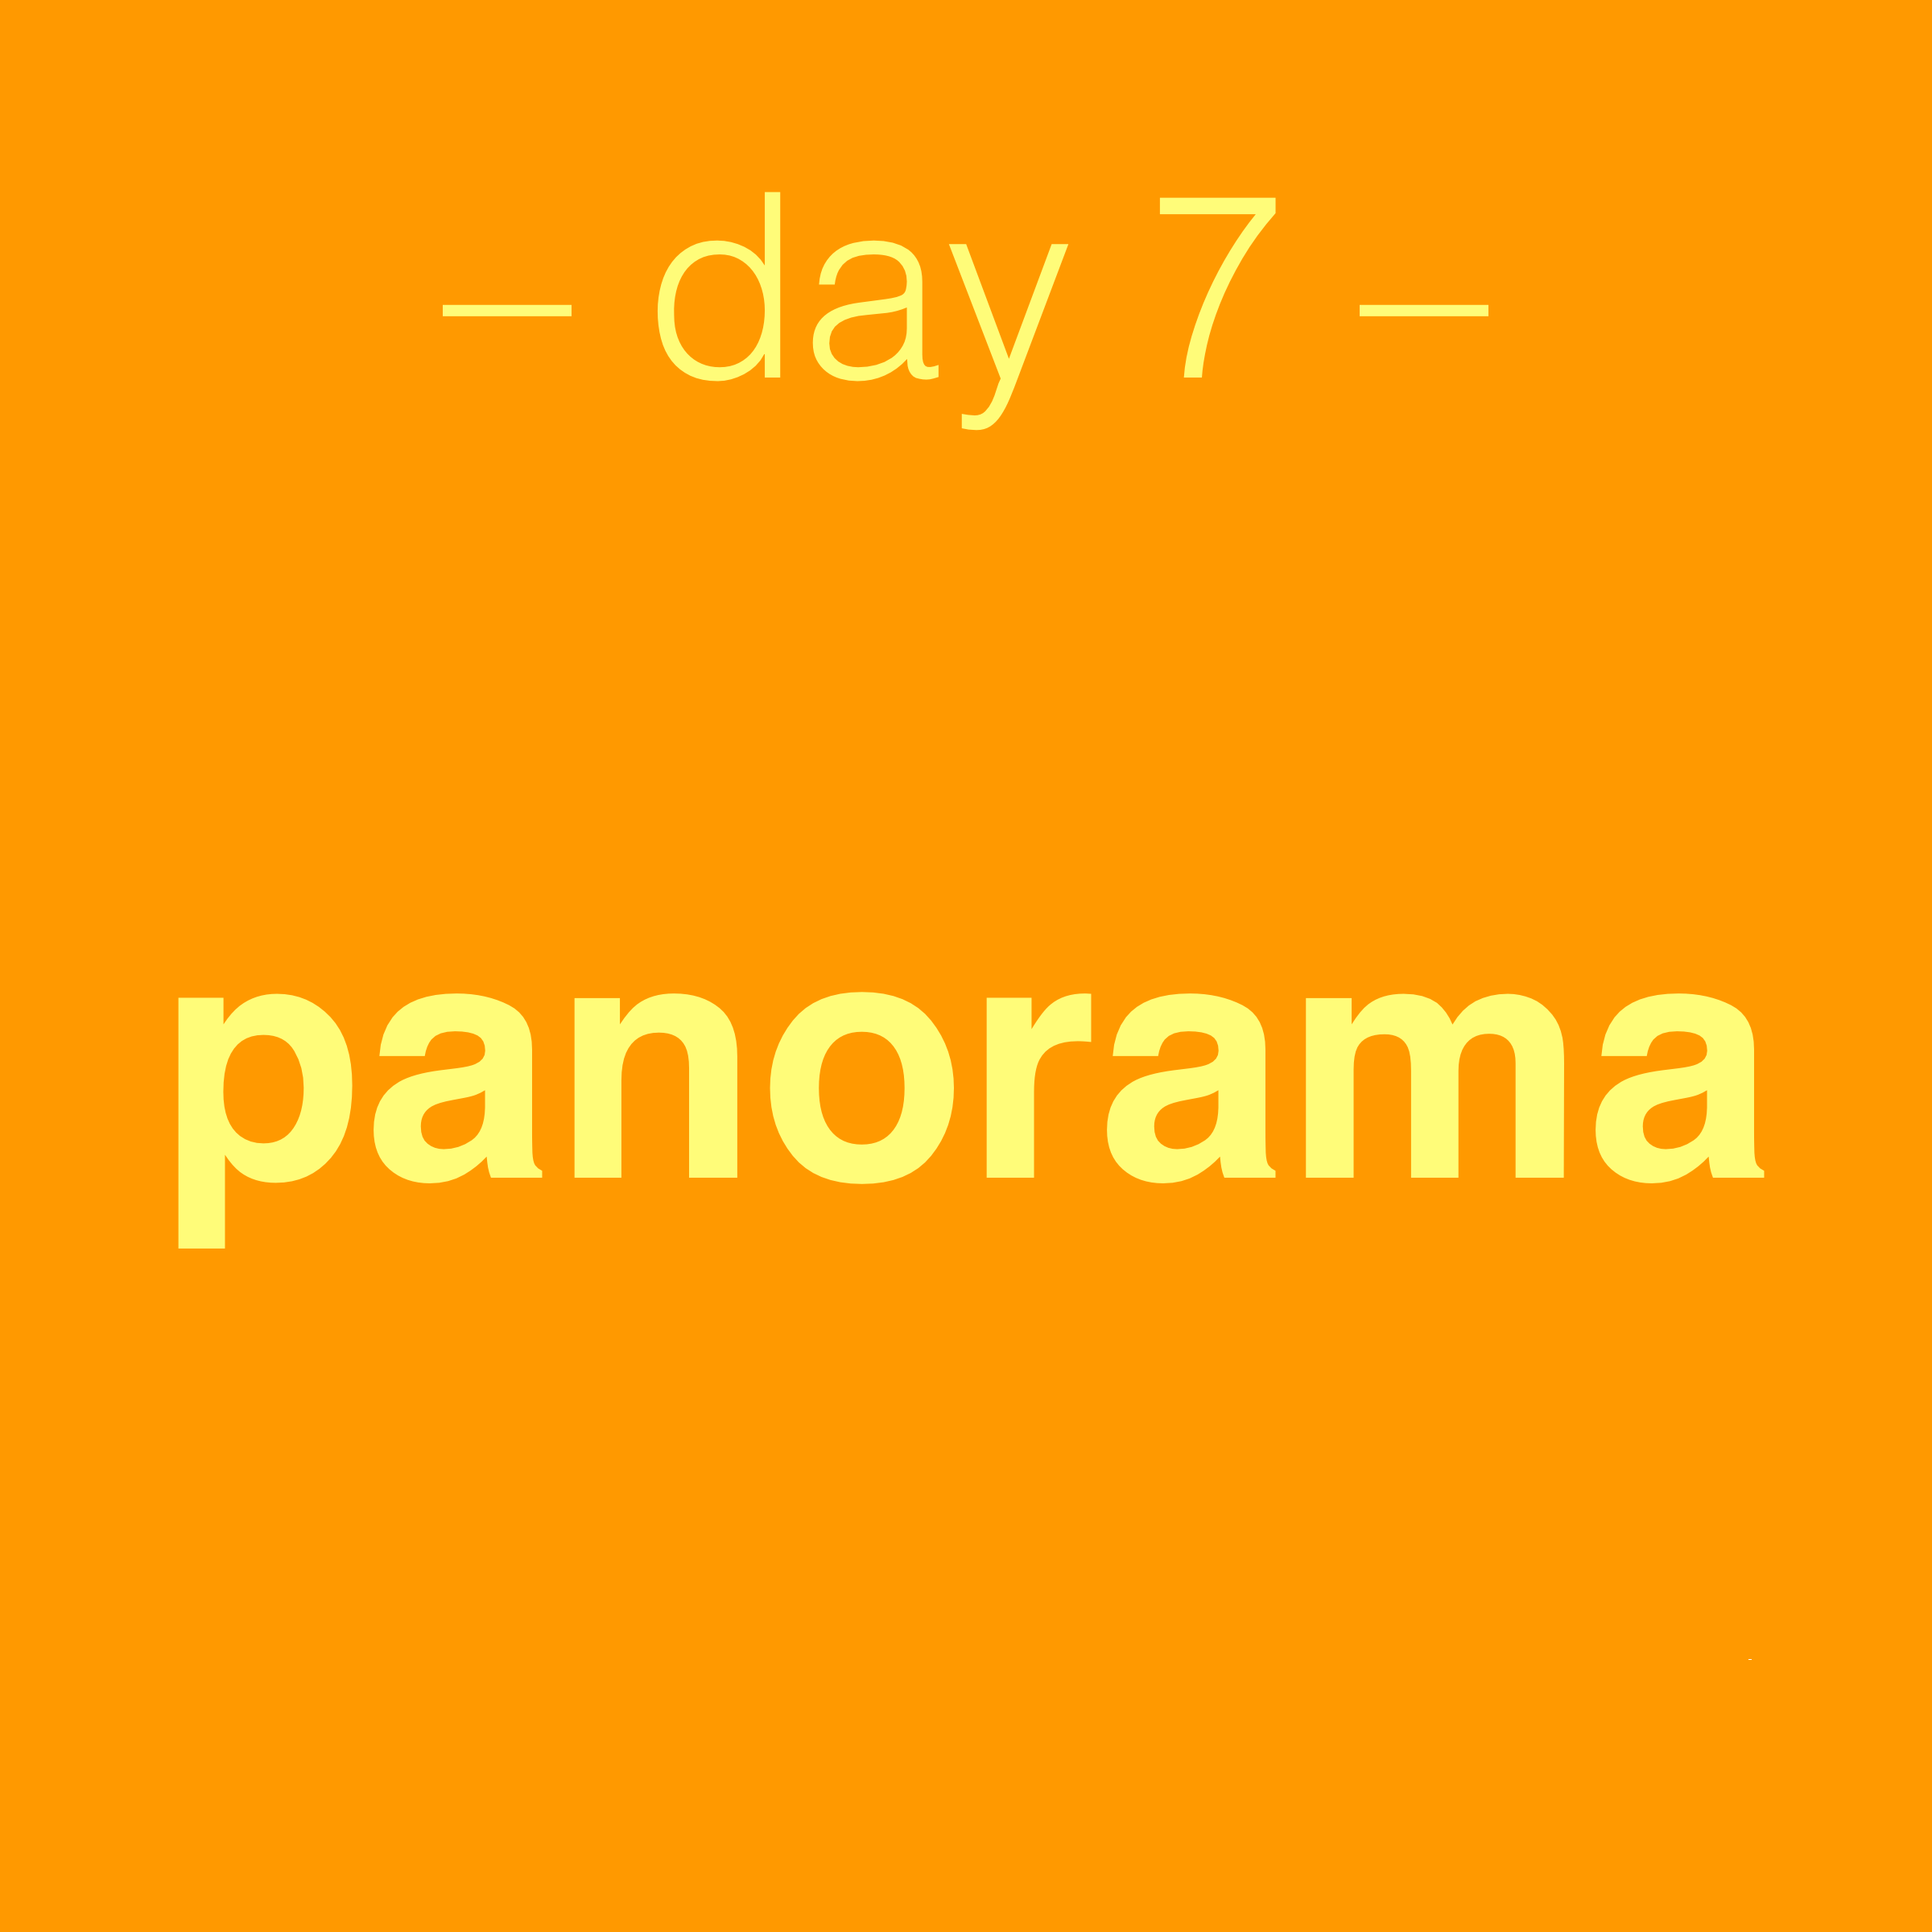 day 7: panorama